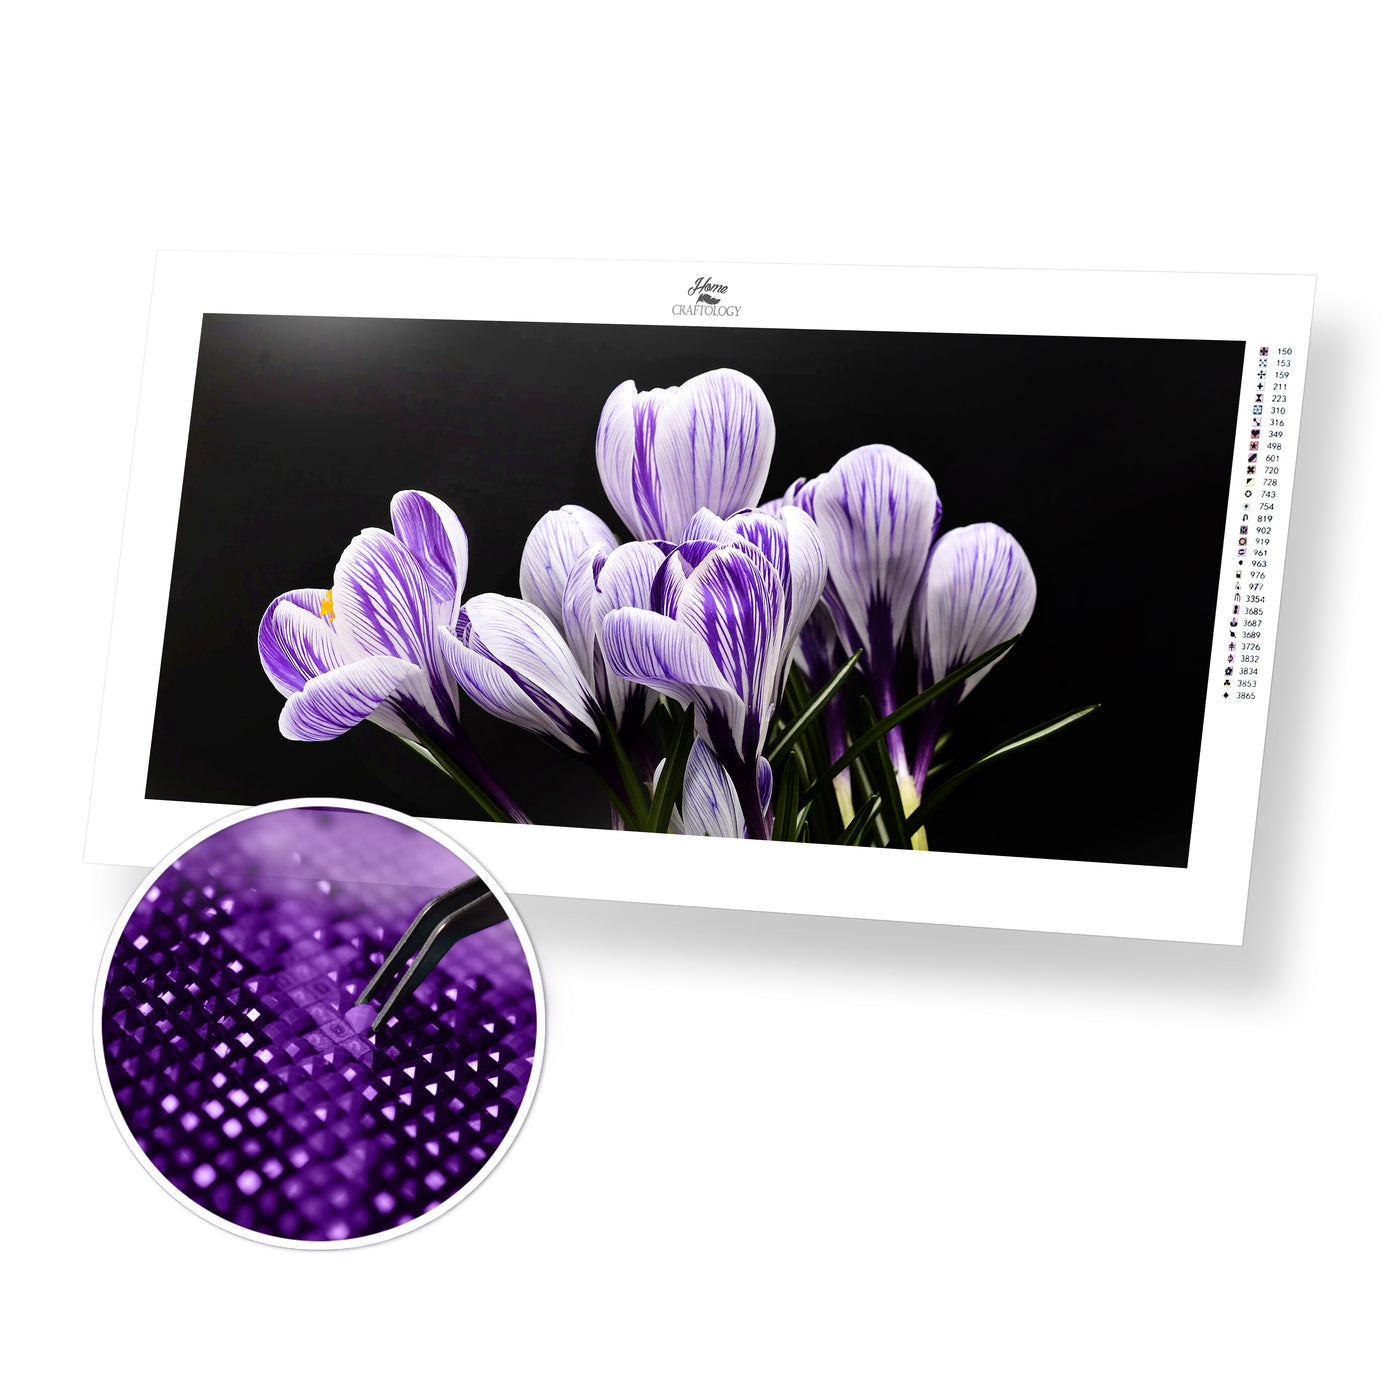 White and Purple Crocus Flowers - Premium Diamond Painting Kit